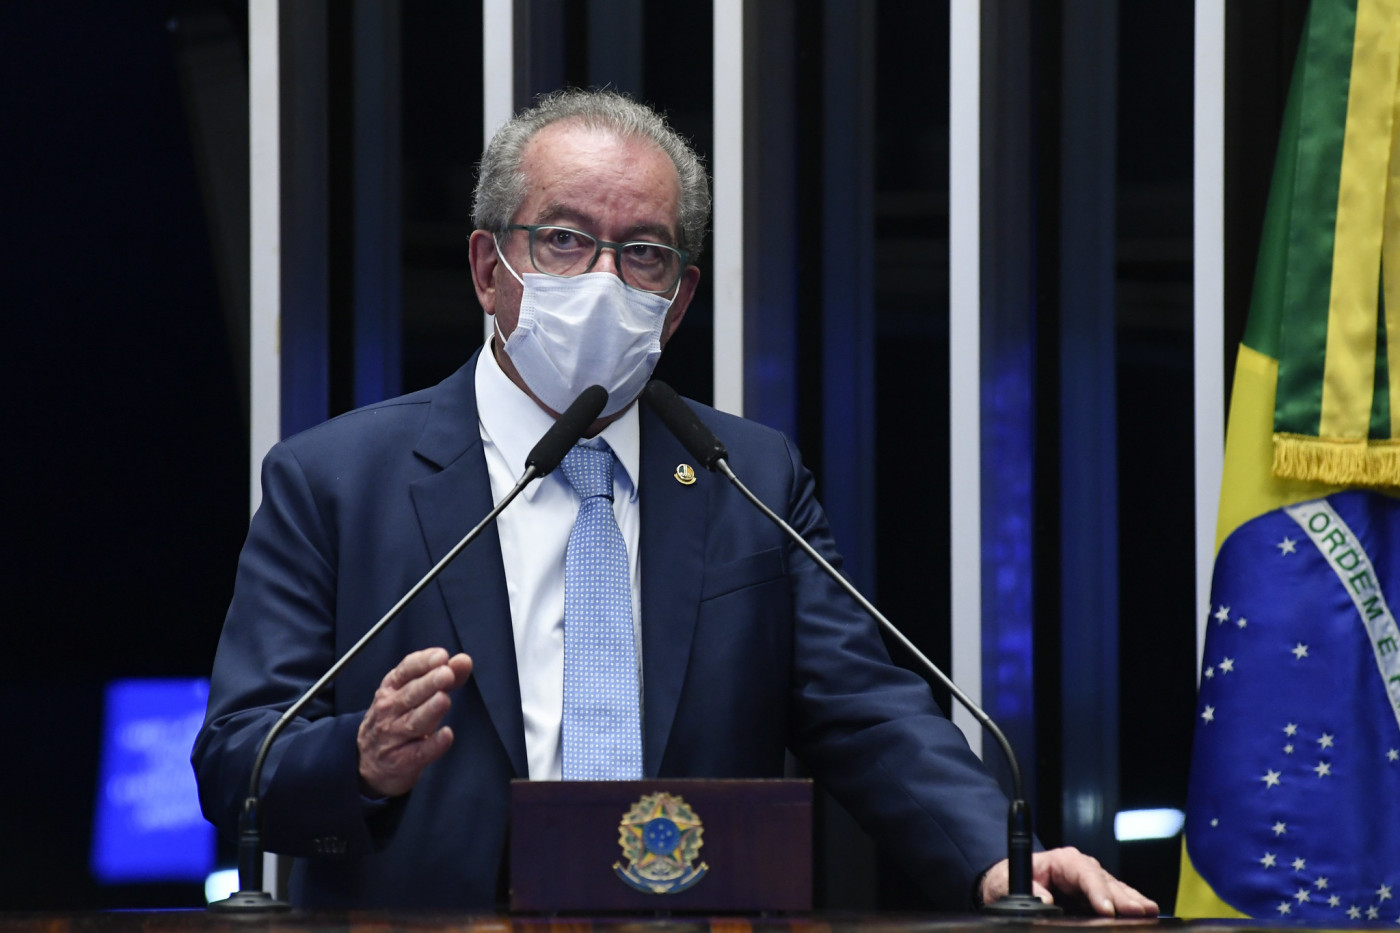 José Aníbal de máscara no plenário do Senado